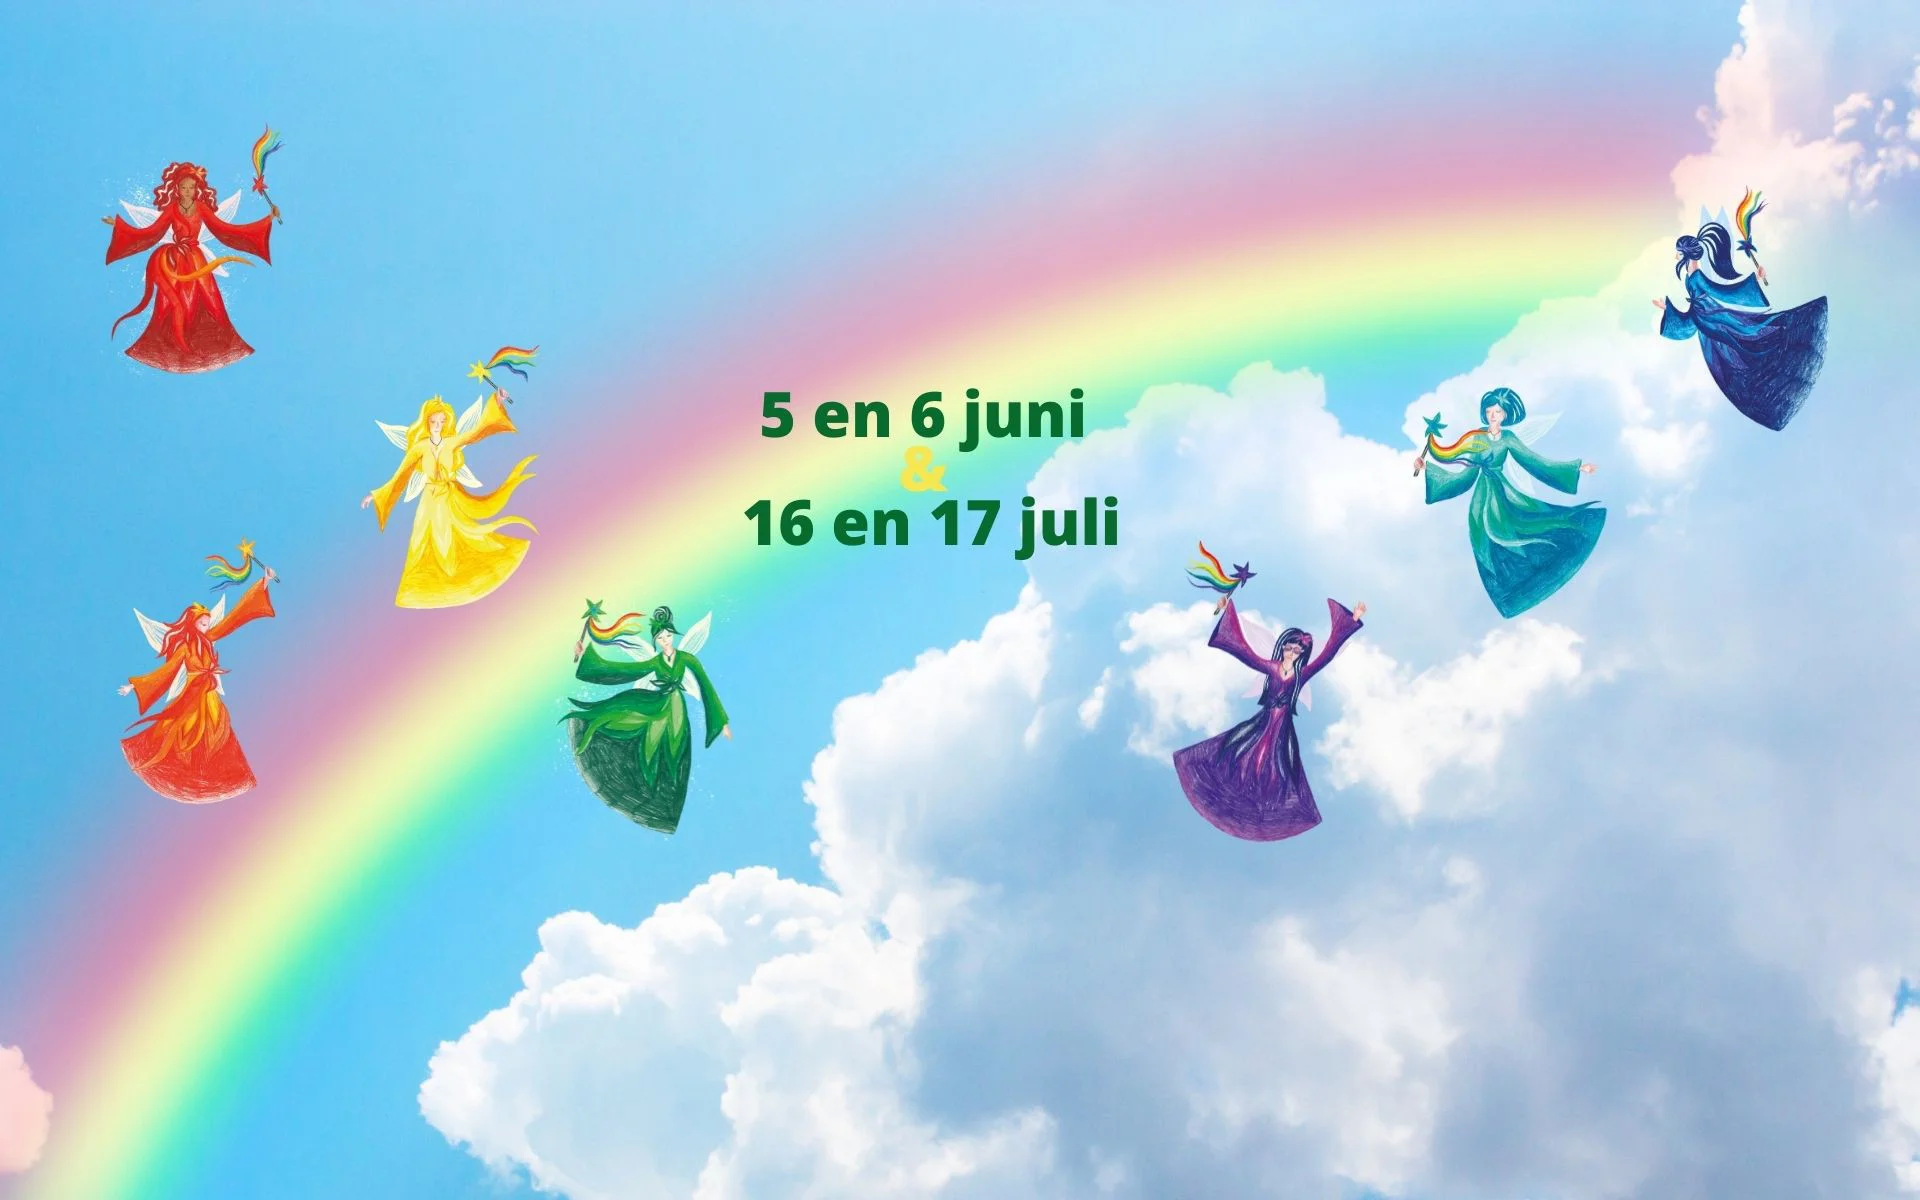 Kindertheaterfestival de Sprookjestuinen van Drenthe